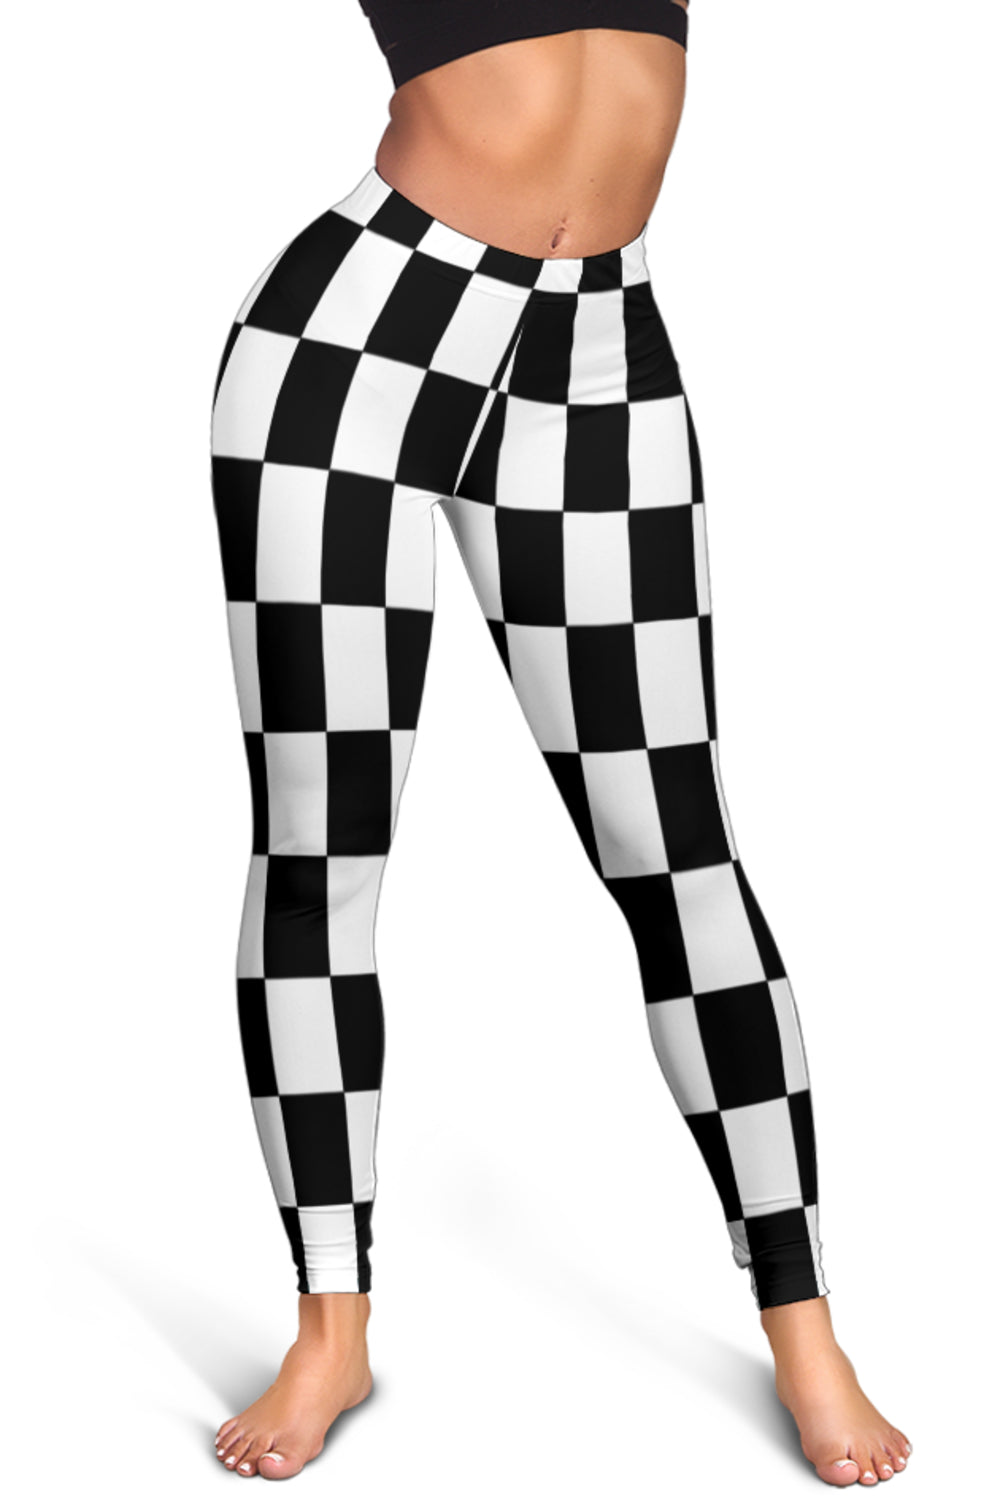 Racing Checkered Leggings